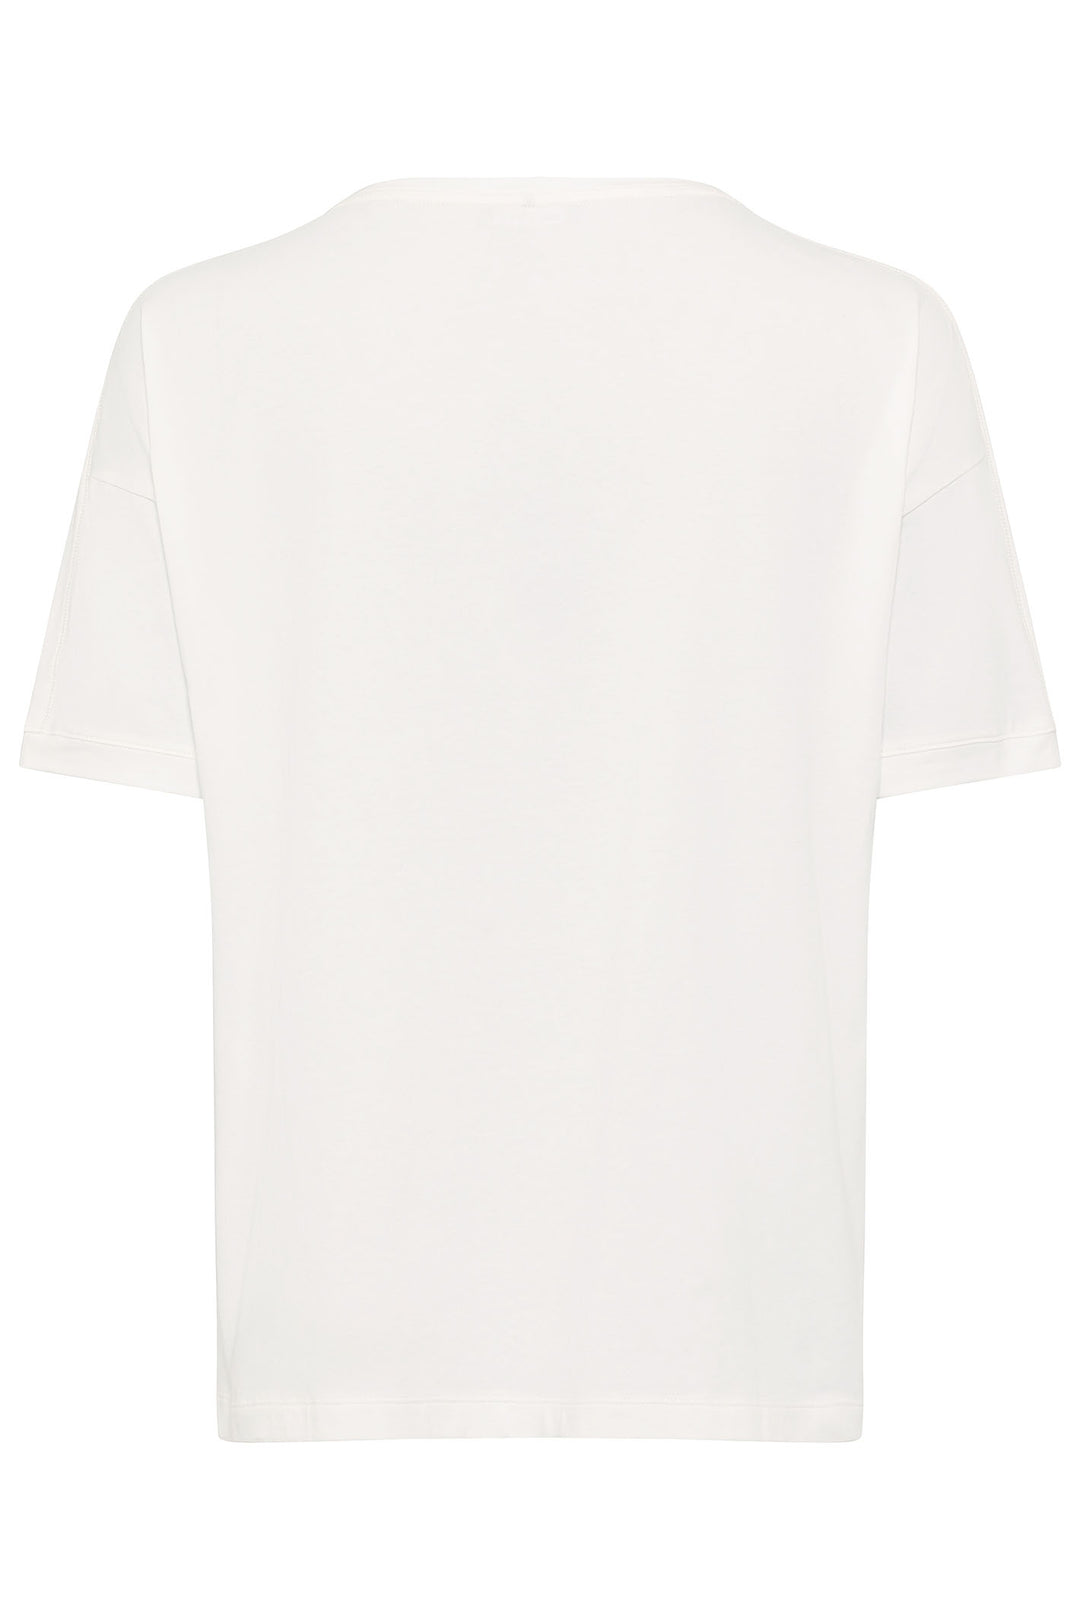 Olsen 11104751 Off White Sequin Motif Round Neck T-Shirt - Dotique Chesterfield